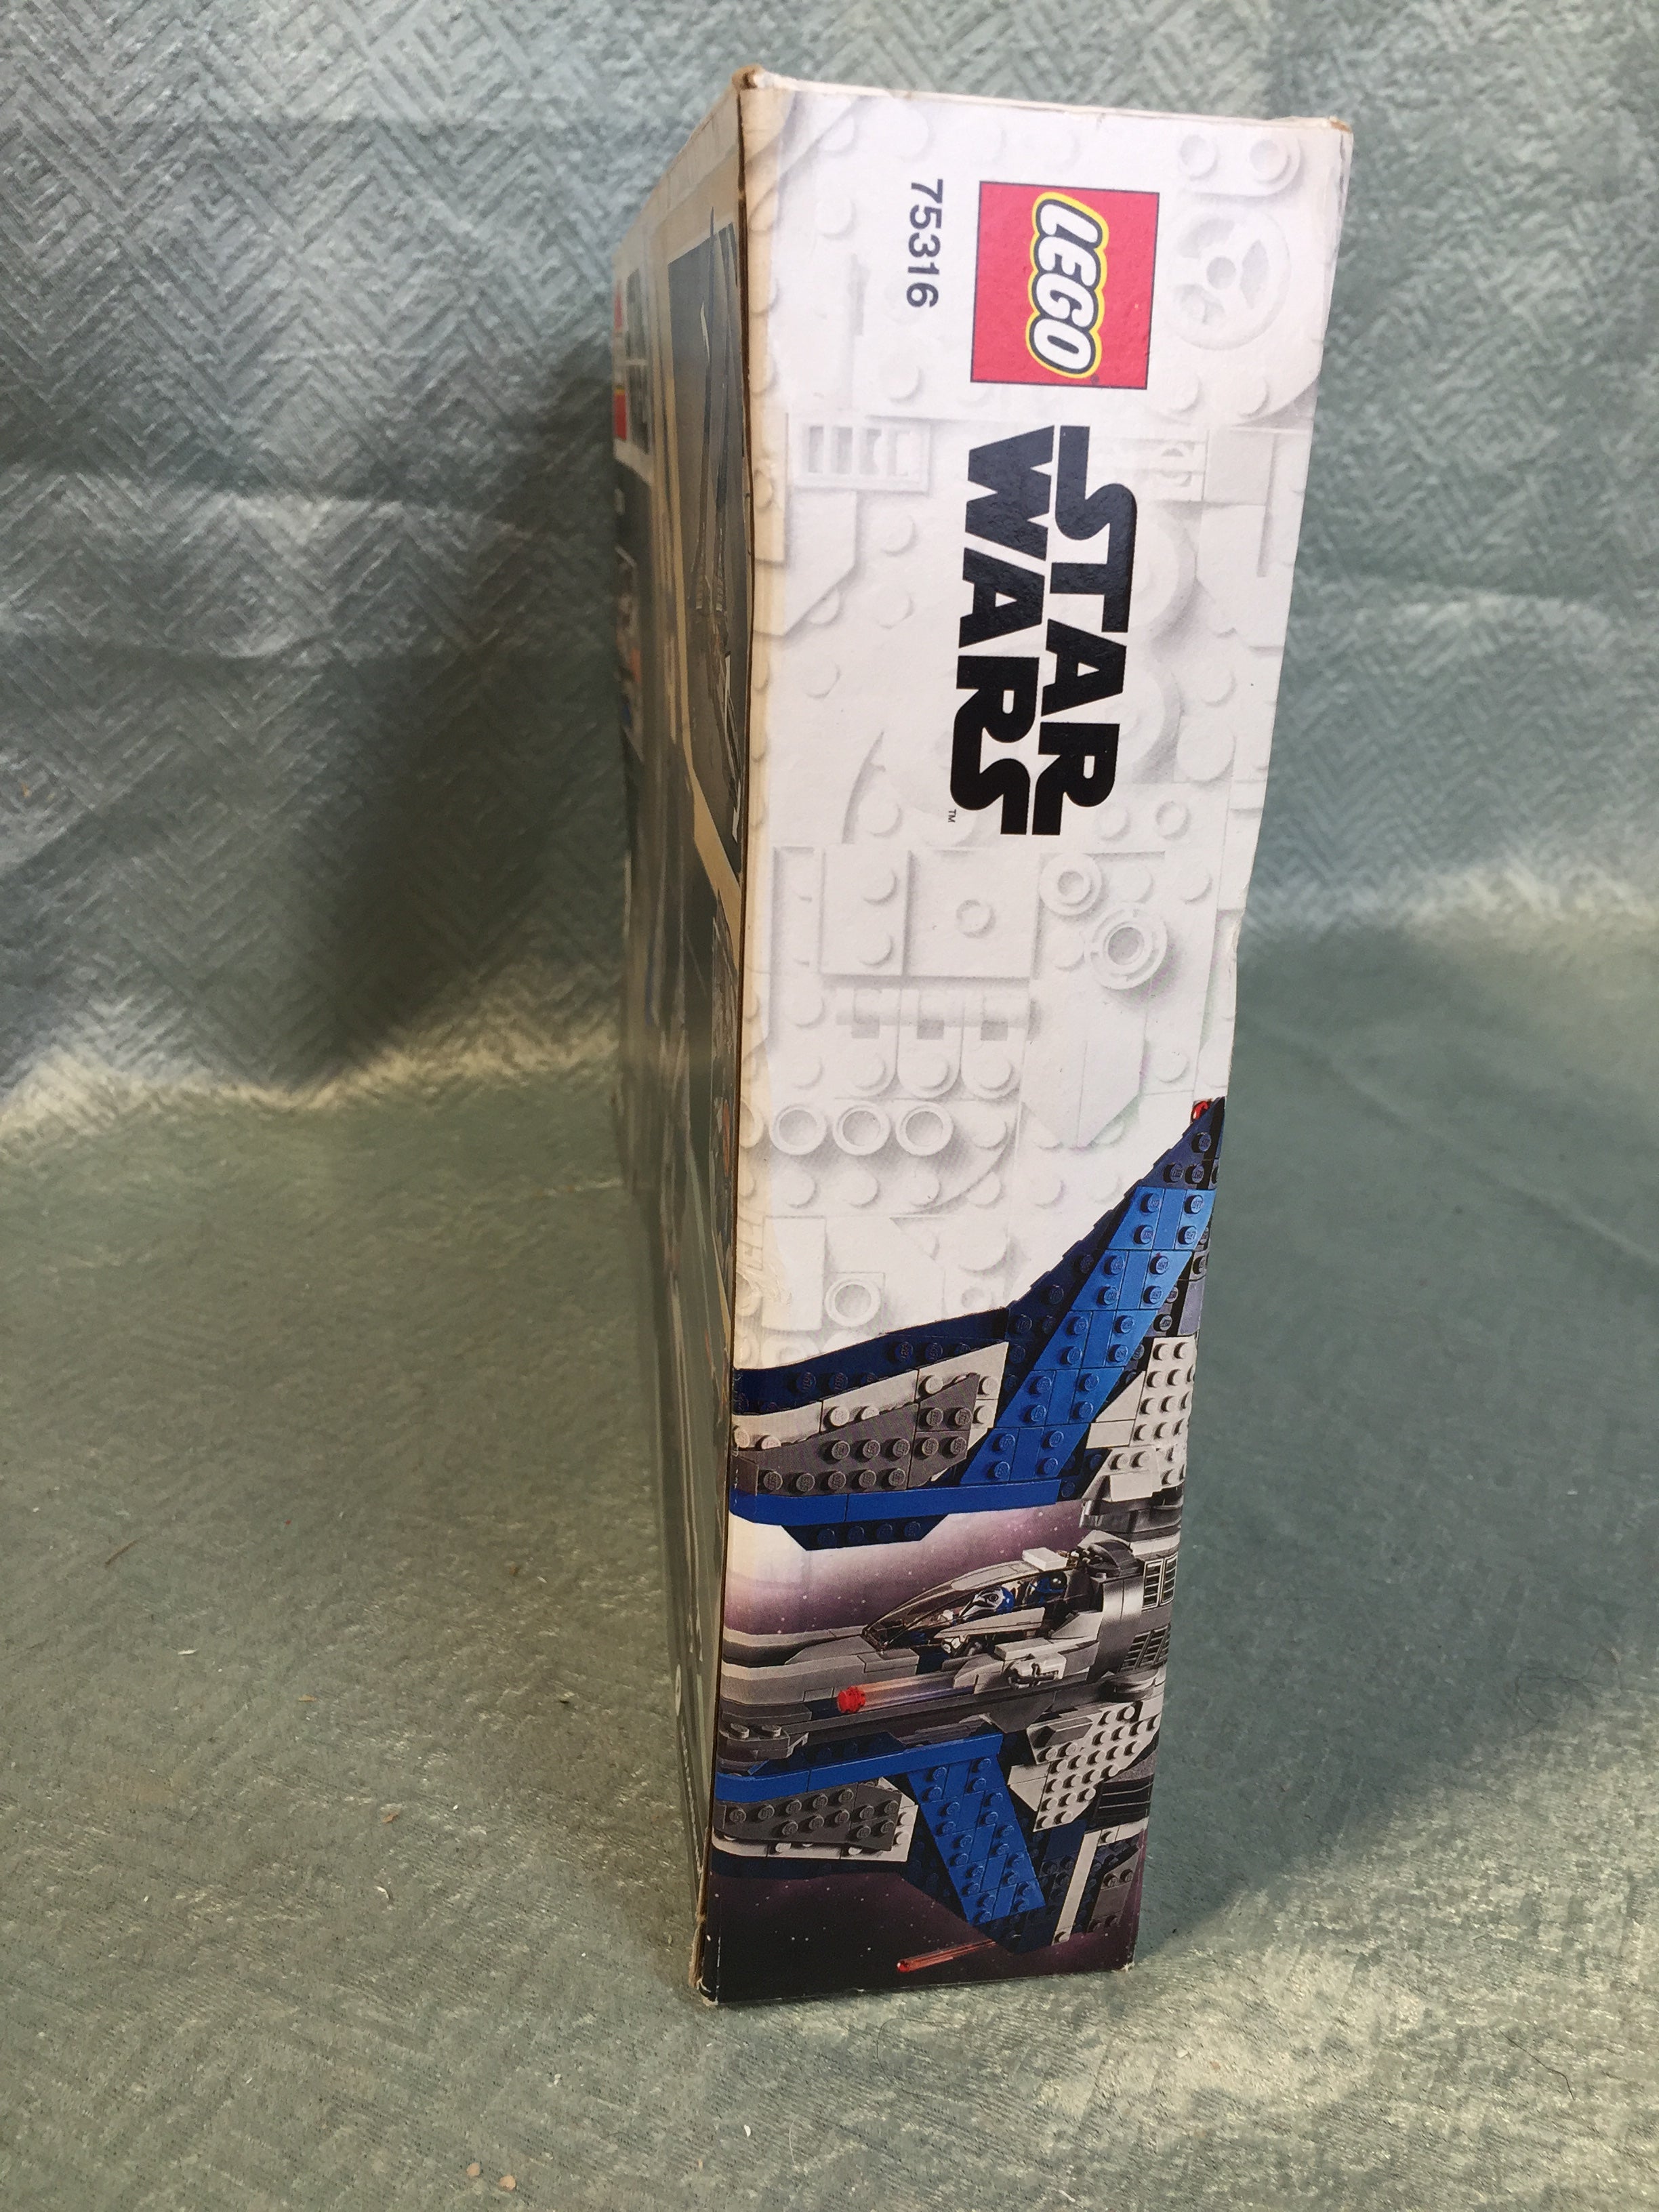 LEGO Star Wars Mandalorian Starfighter 75316 - 544 Pieces - SEALED (7611658502382)